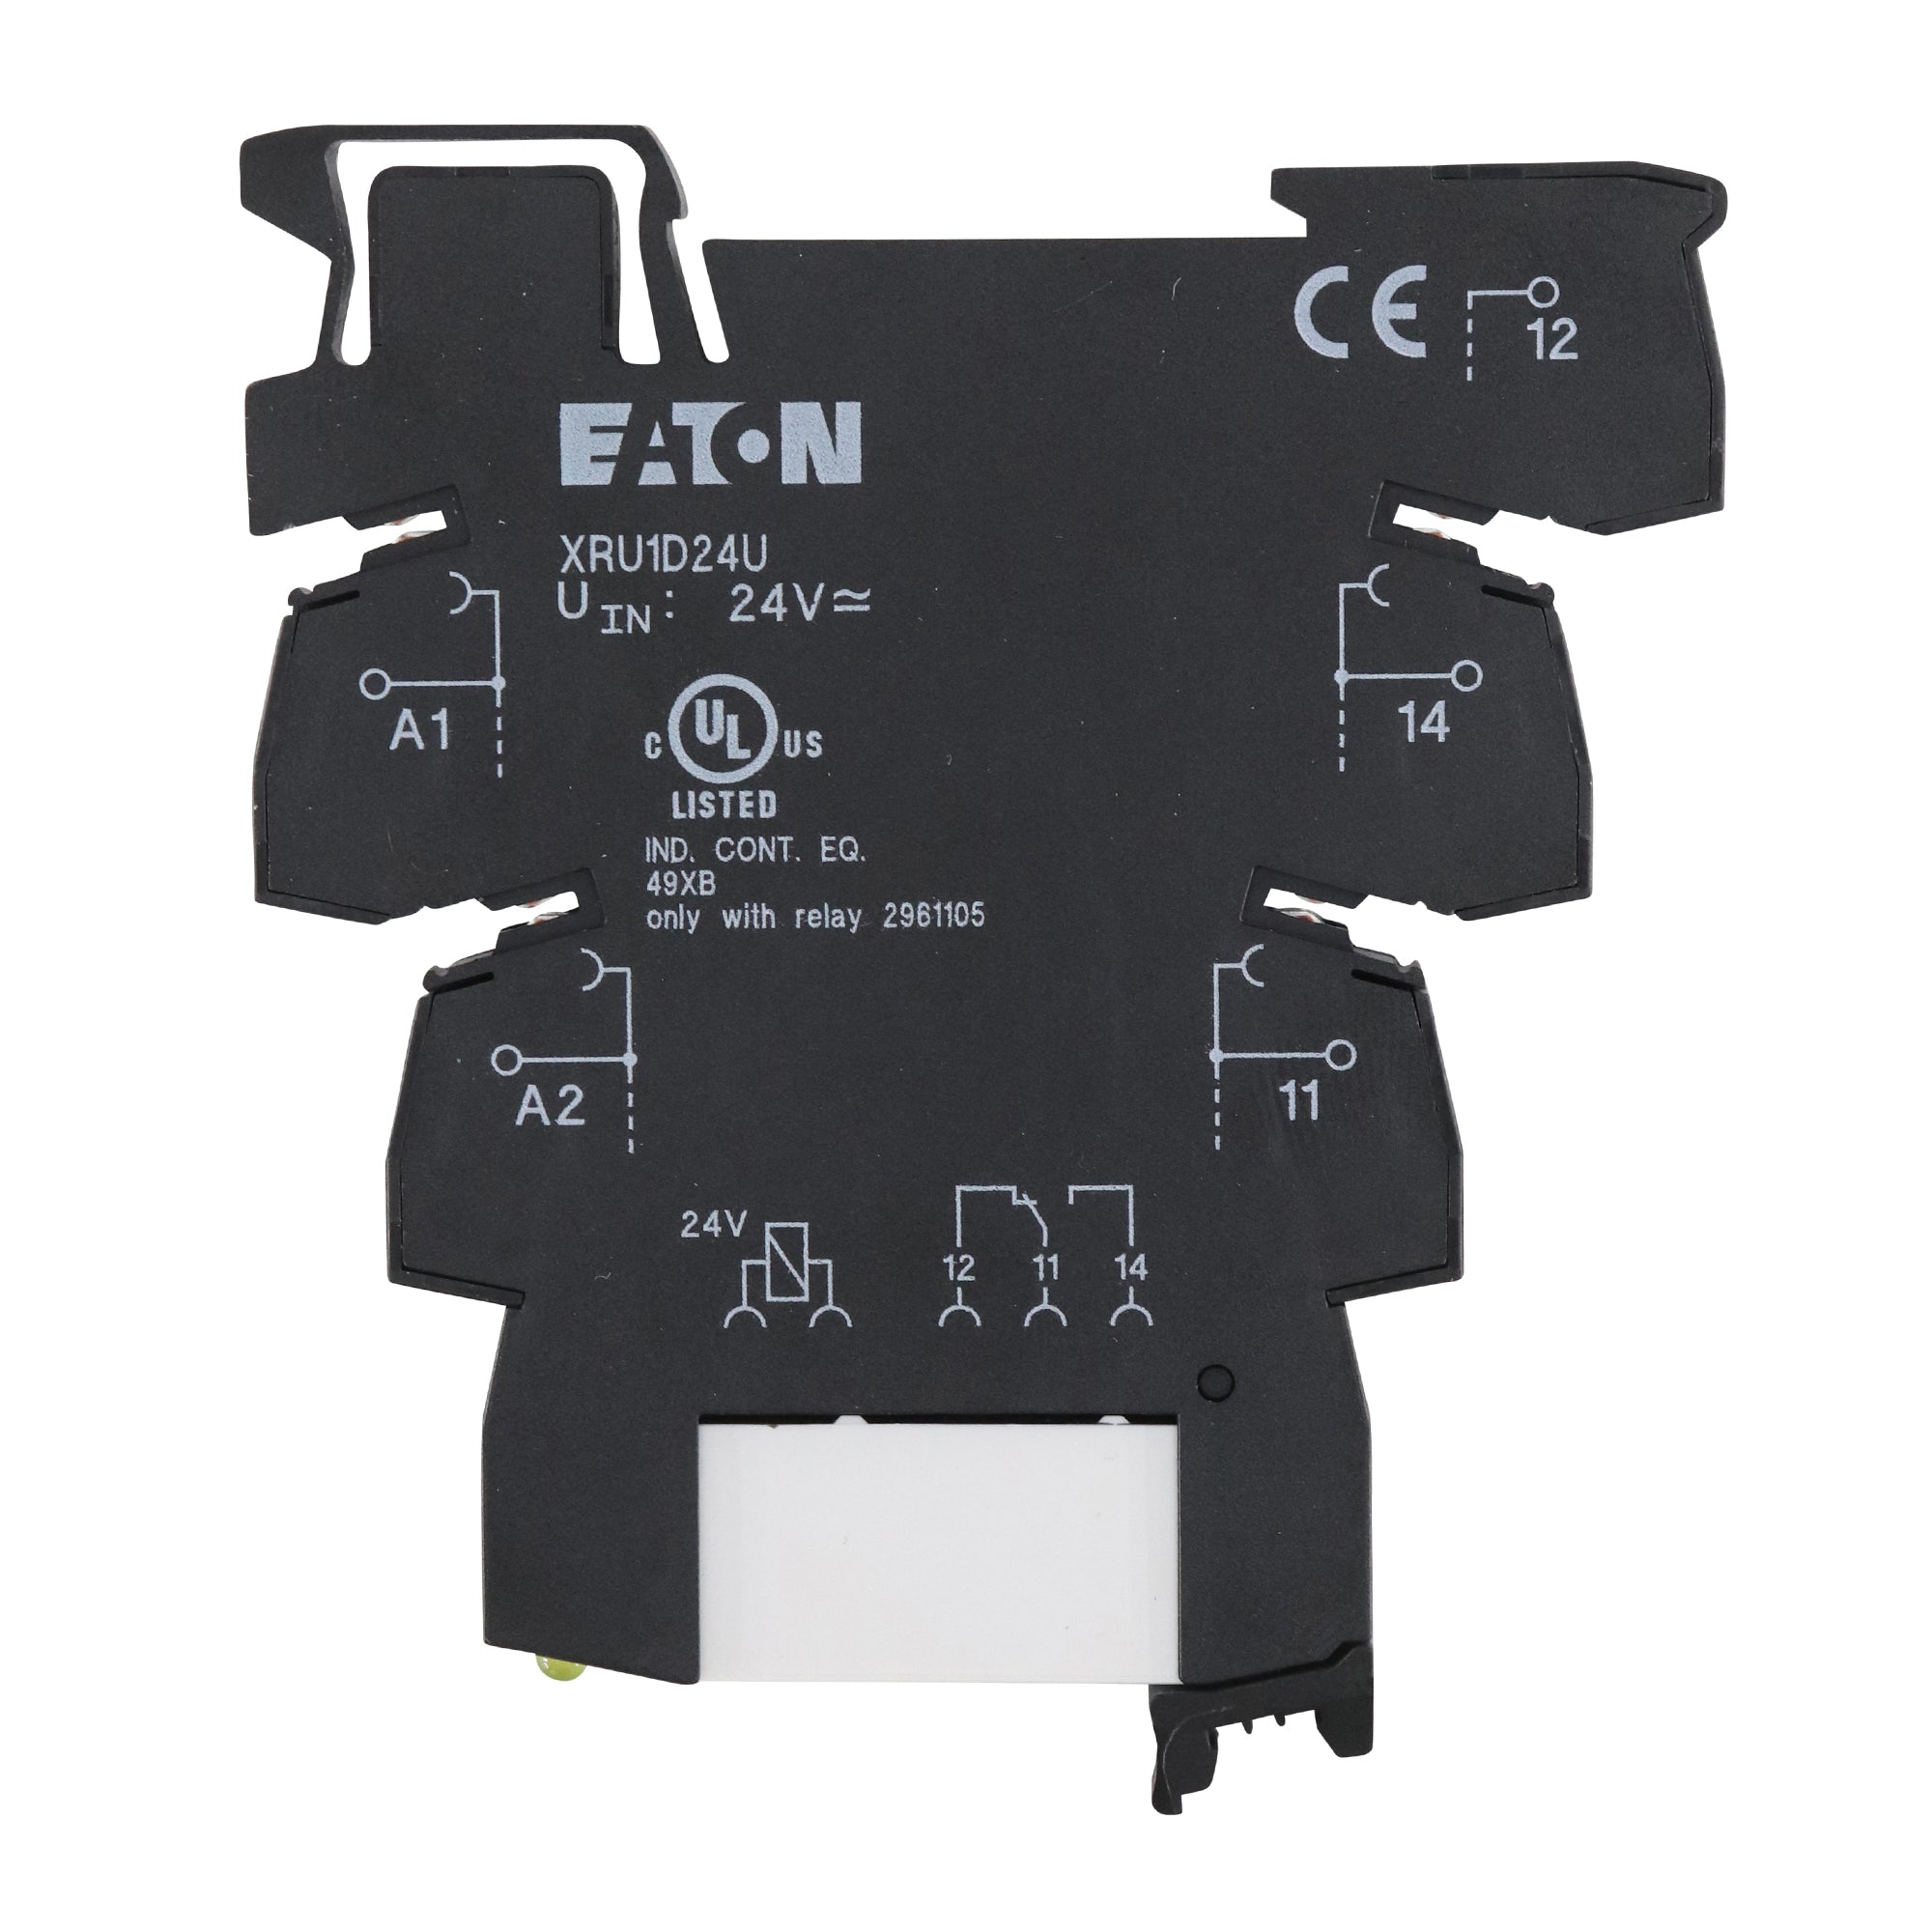 EATON, EATON XRU1D24U DIN MOUNT TERMINAL BLOCK RELAY MODULE, LED, 3-LEVEL, 24VAC/DC